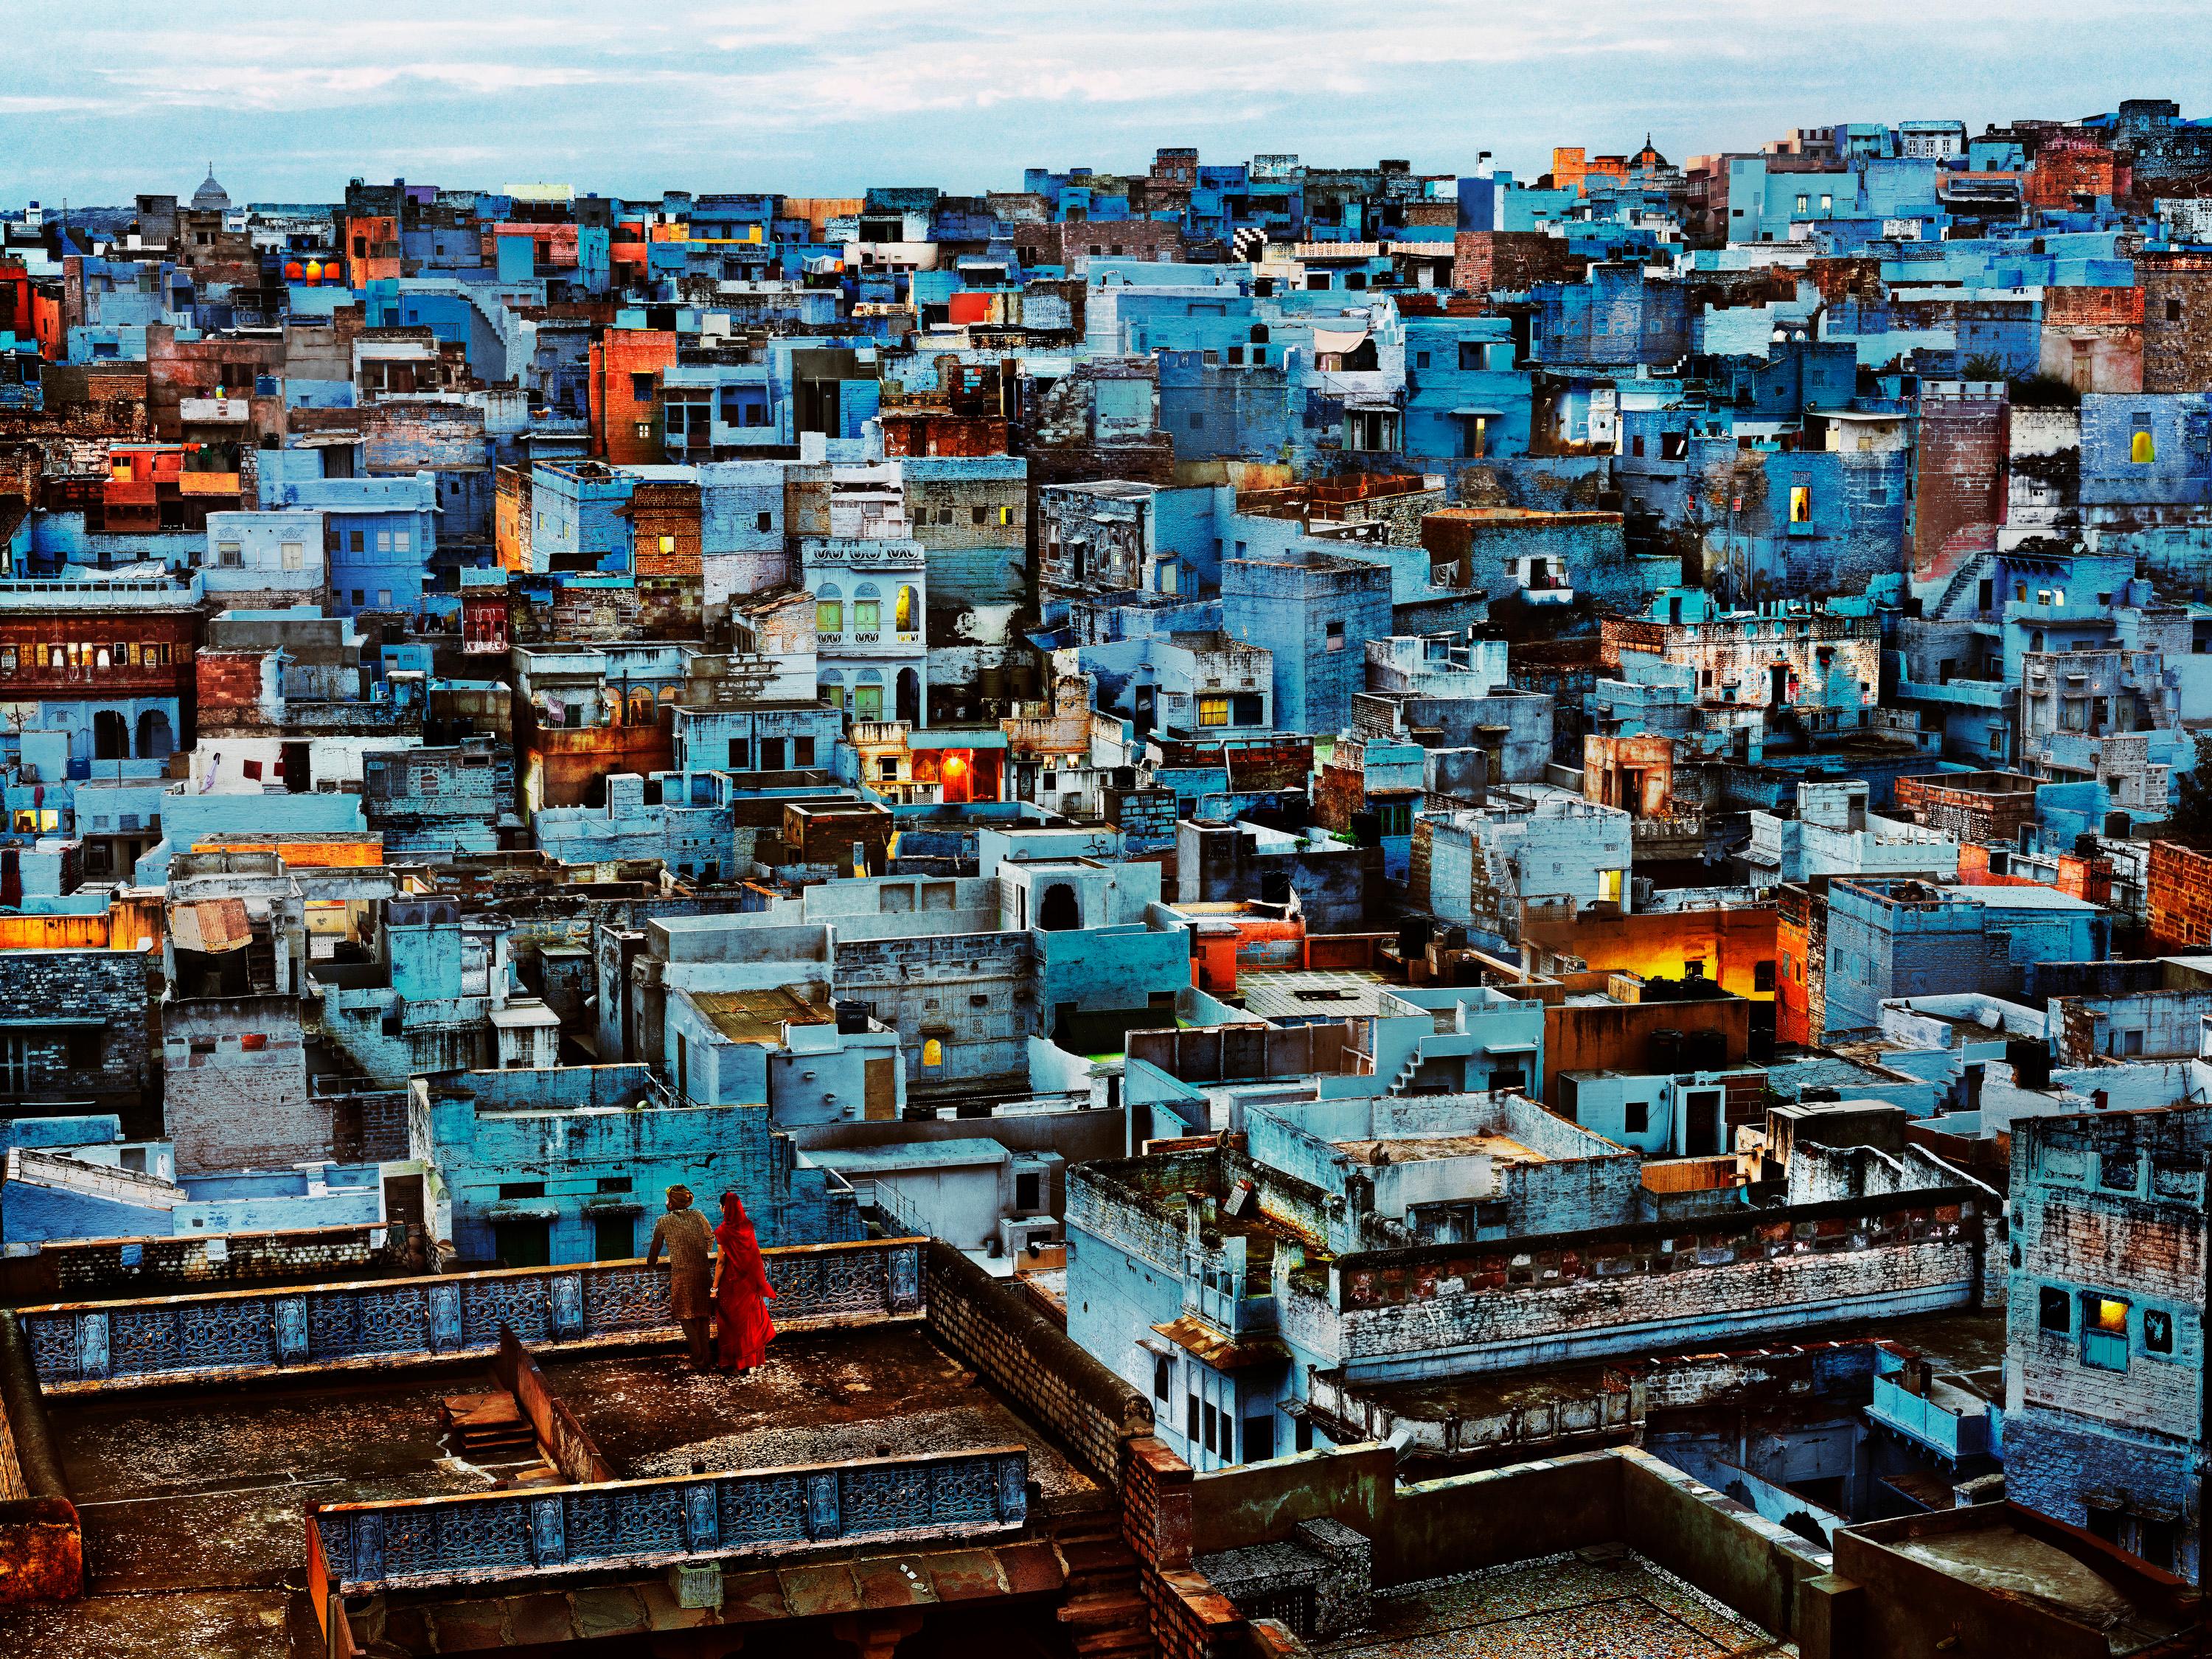 The Blue City, India, 2010 - Steve McCurry (Colour Photography)